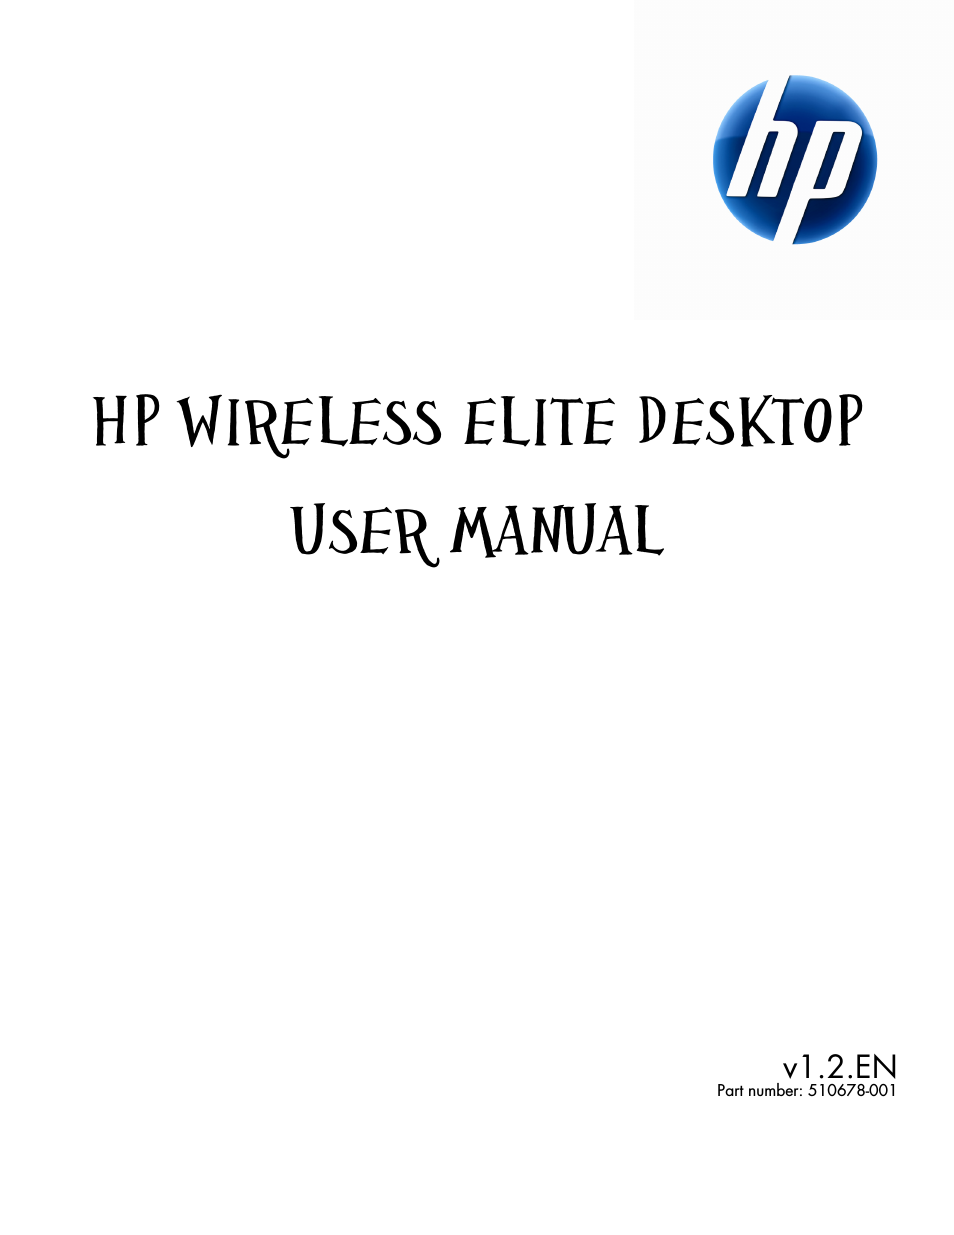 Wireless Elite Desktop Keyboard and Mouse